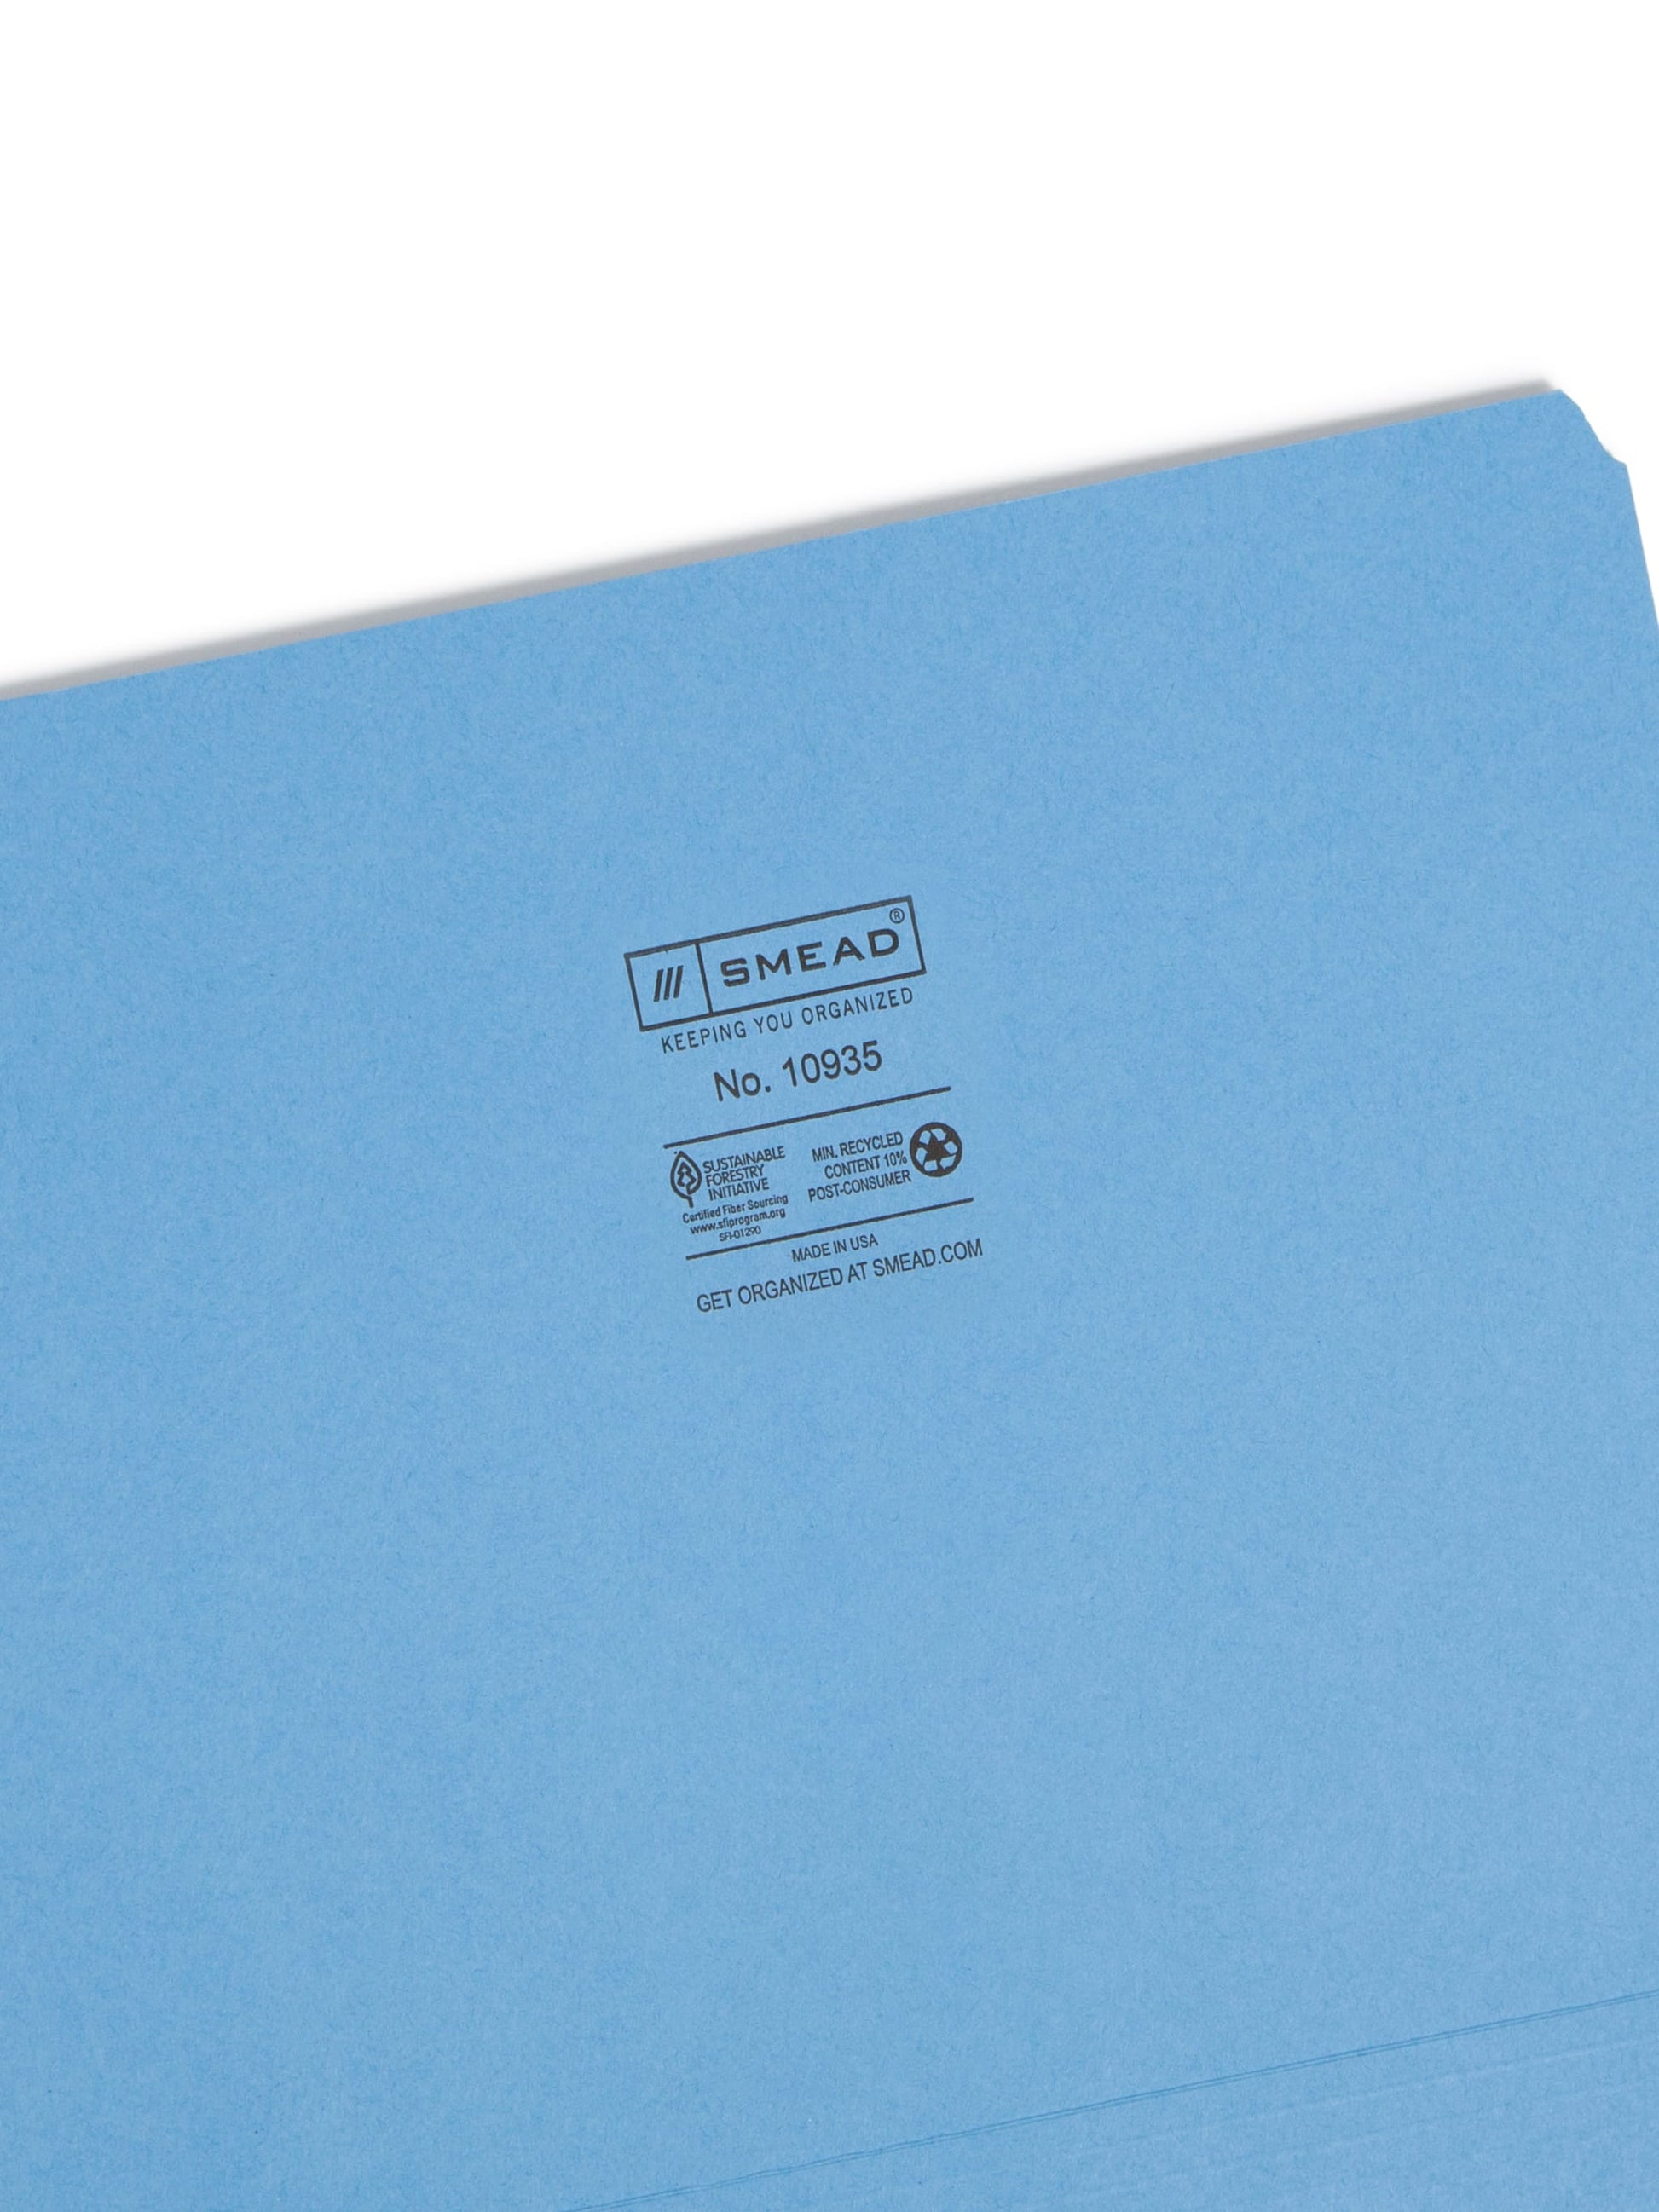 Standard File Folders, Straight-Cut Tab, Blue Color, Letter Size, Set of 100, 086486109352